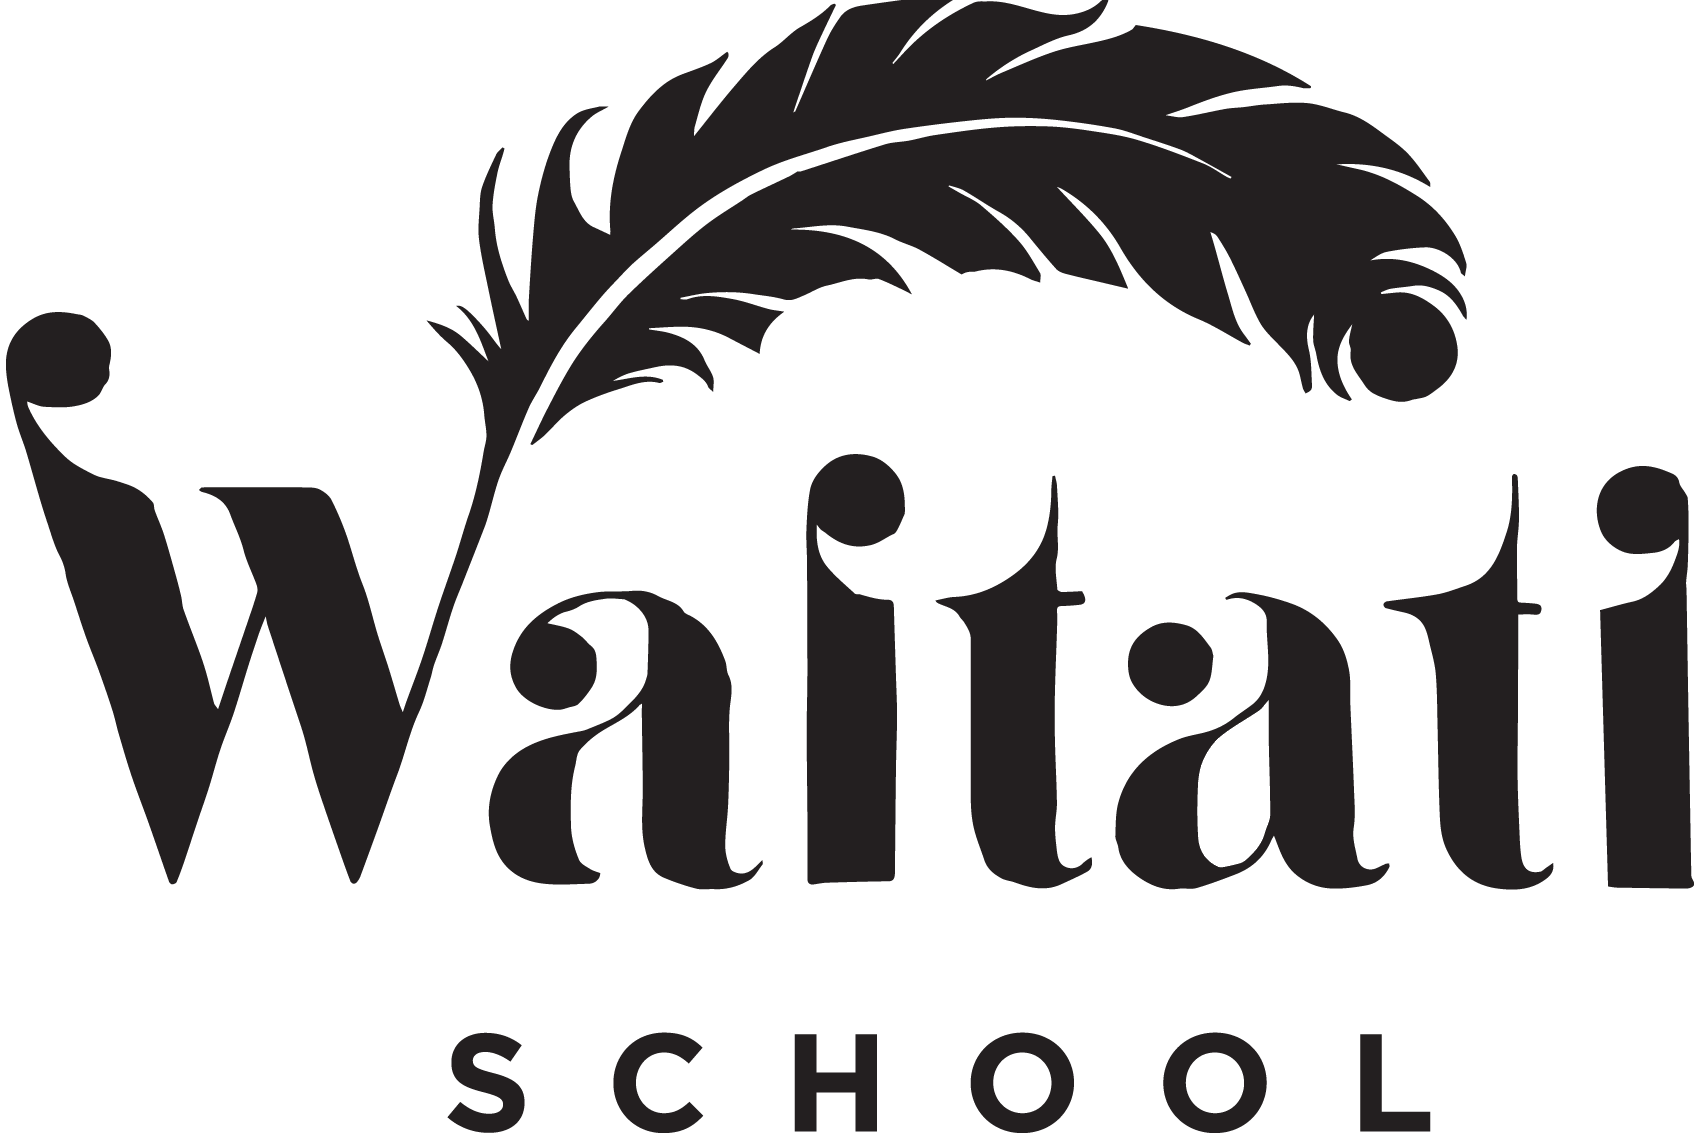 Waitati School